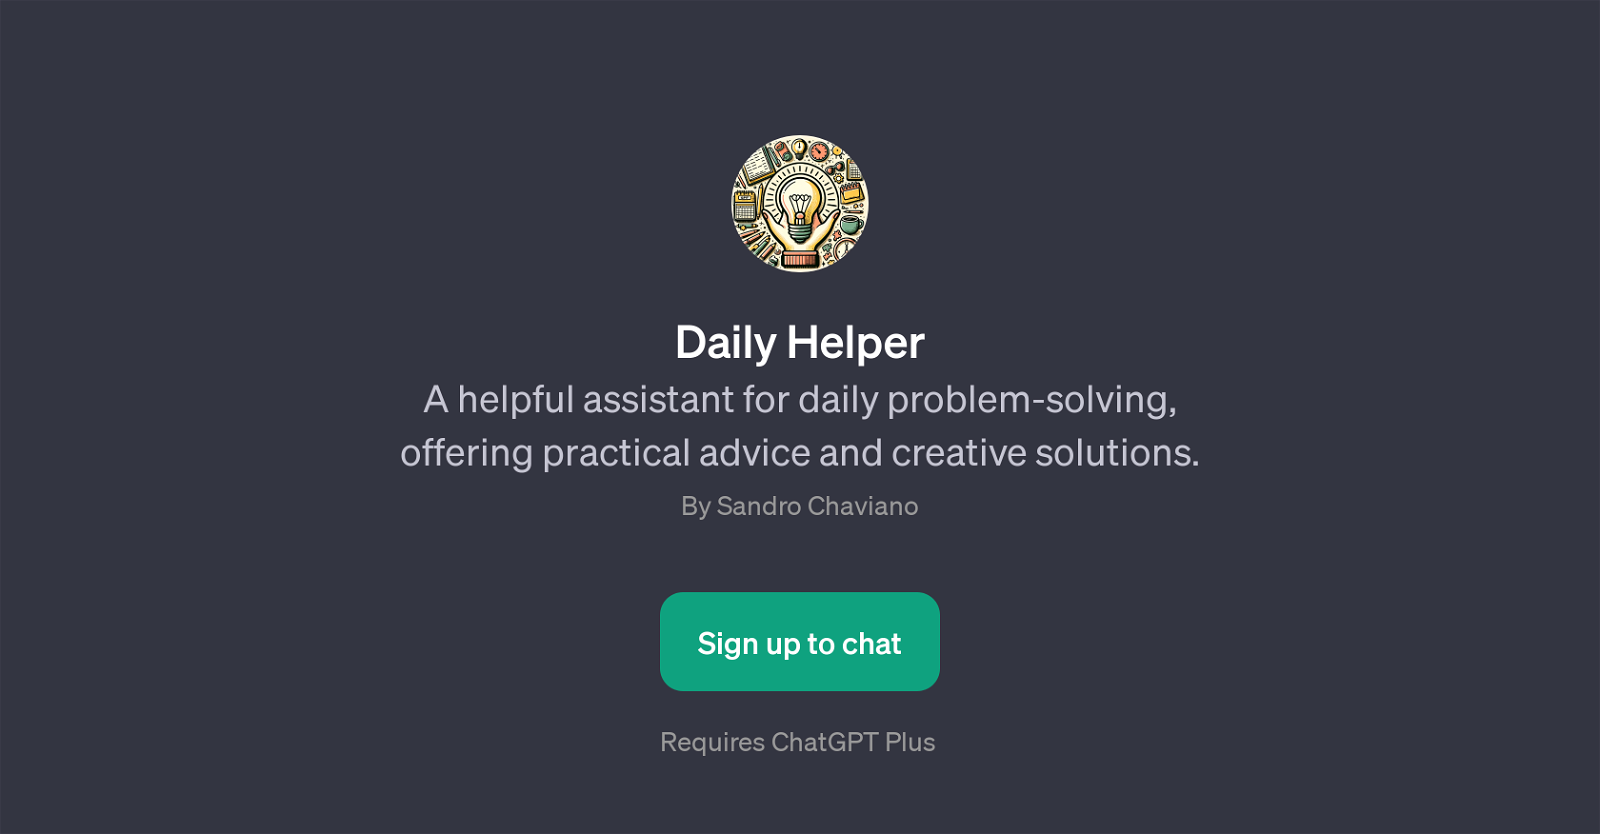 Daily Helper website